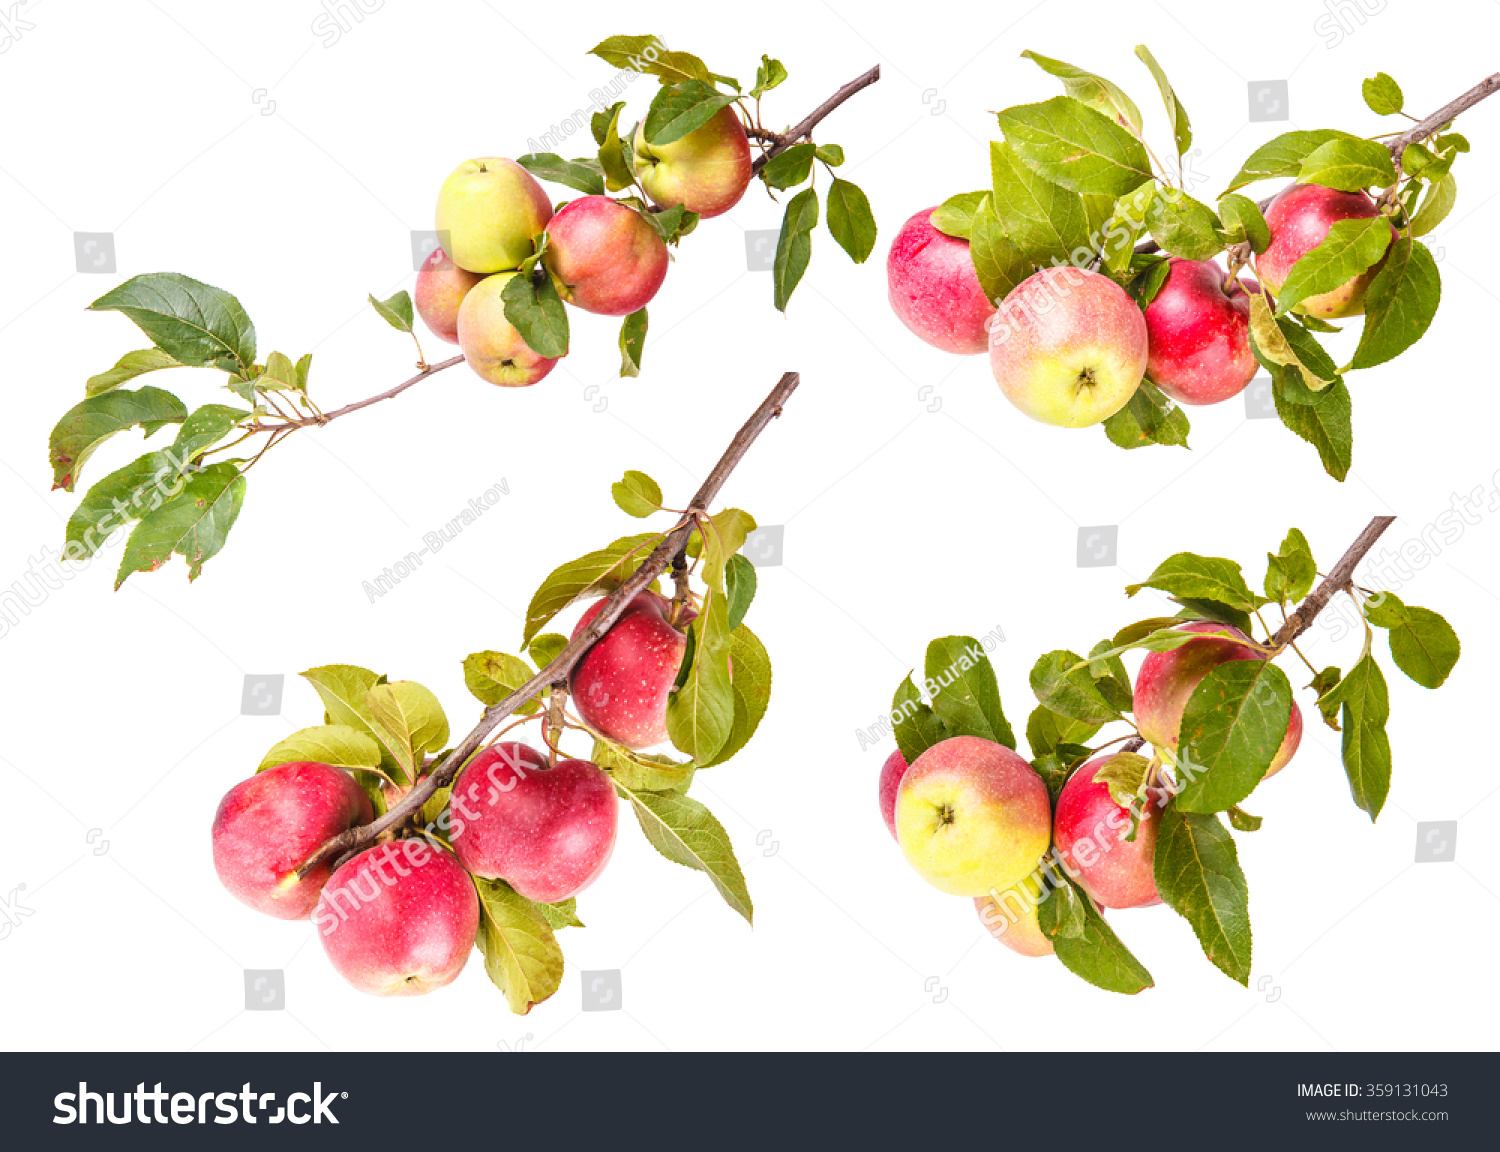 Ветка яблони с яблоками на белом фоне